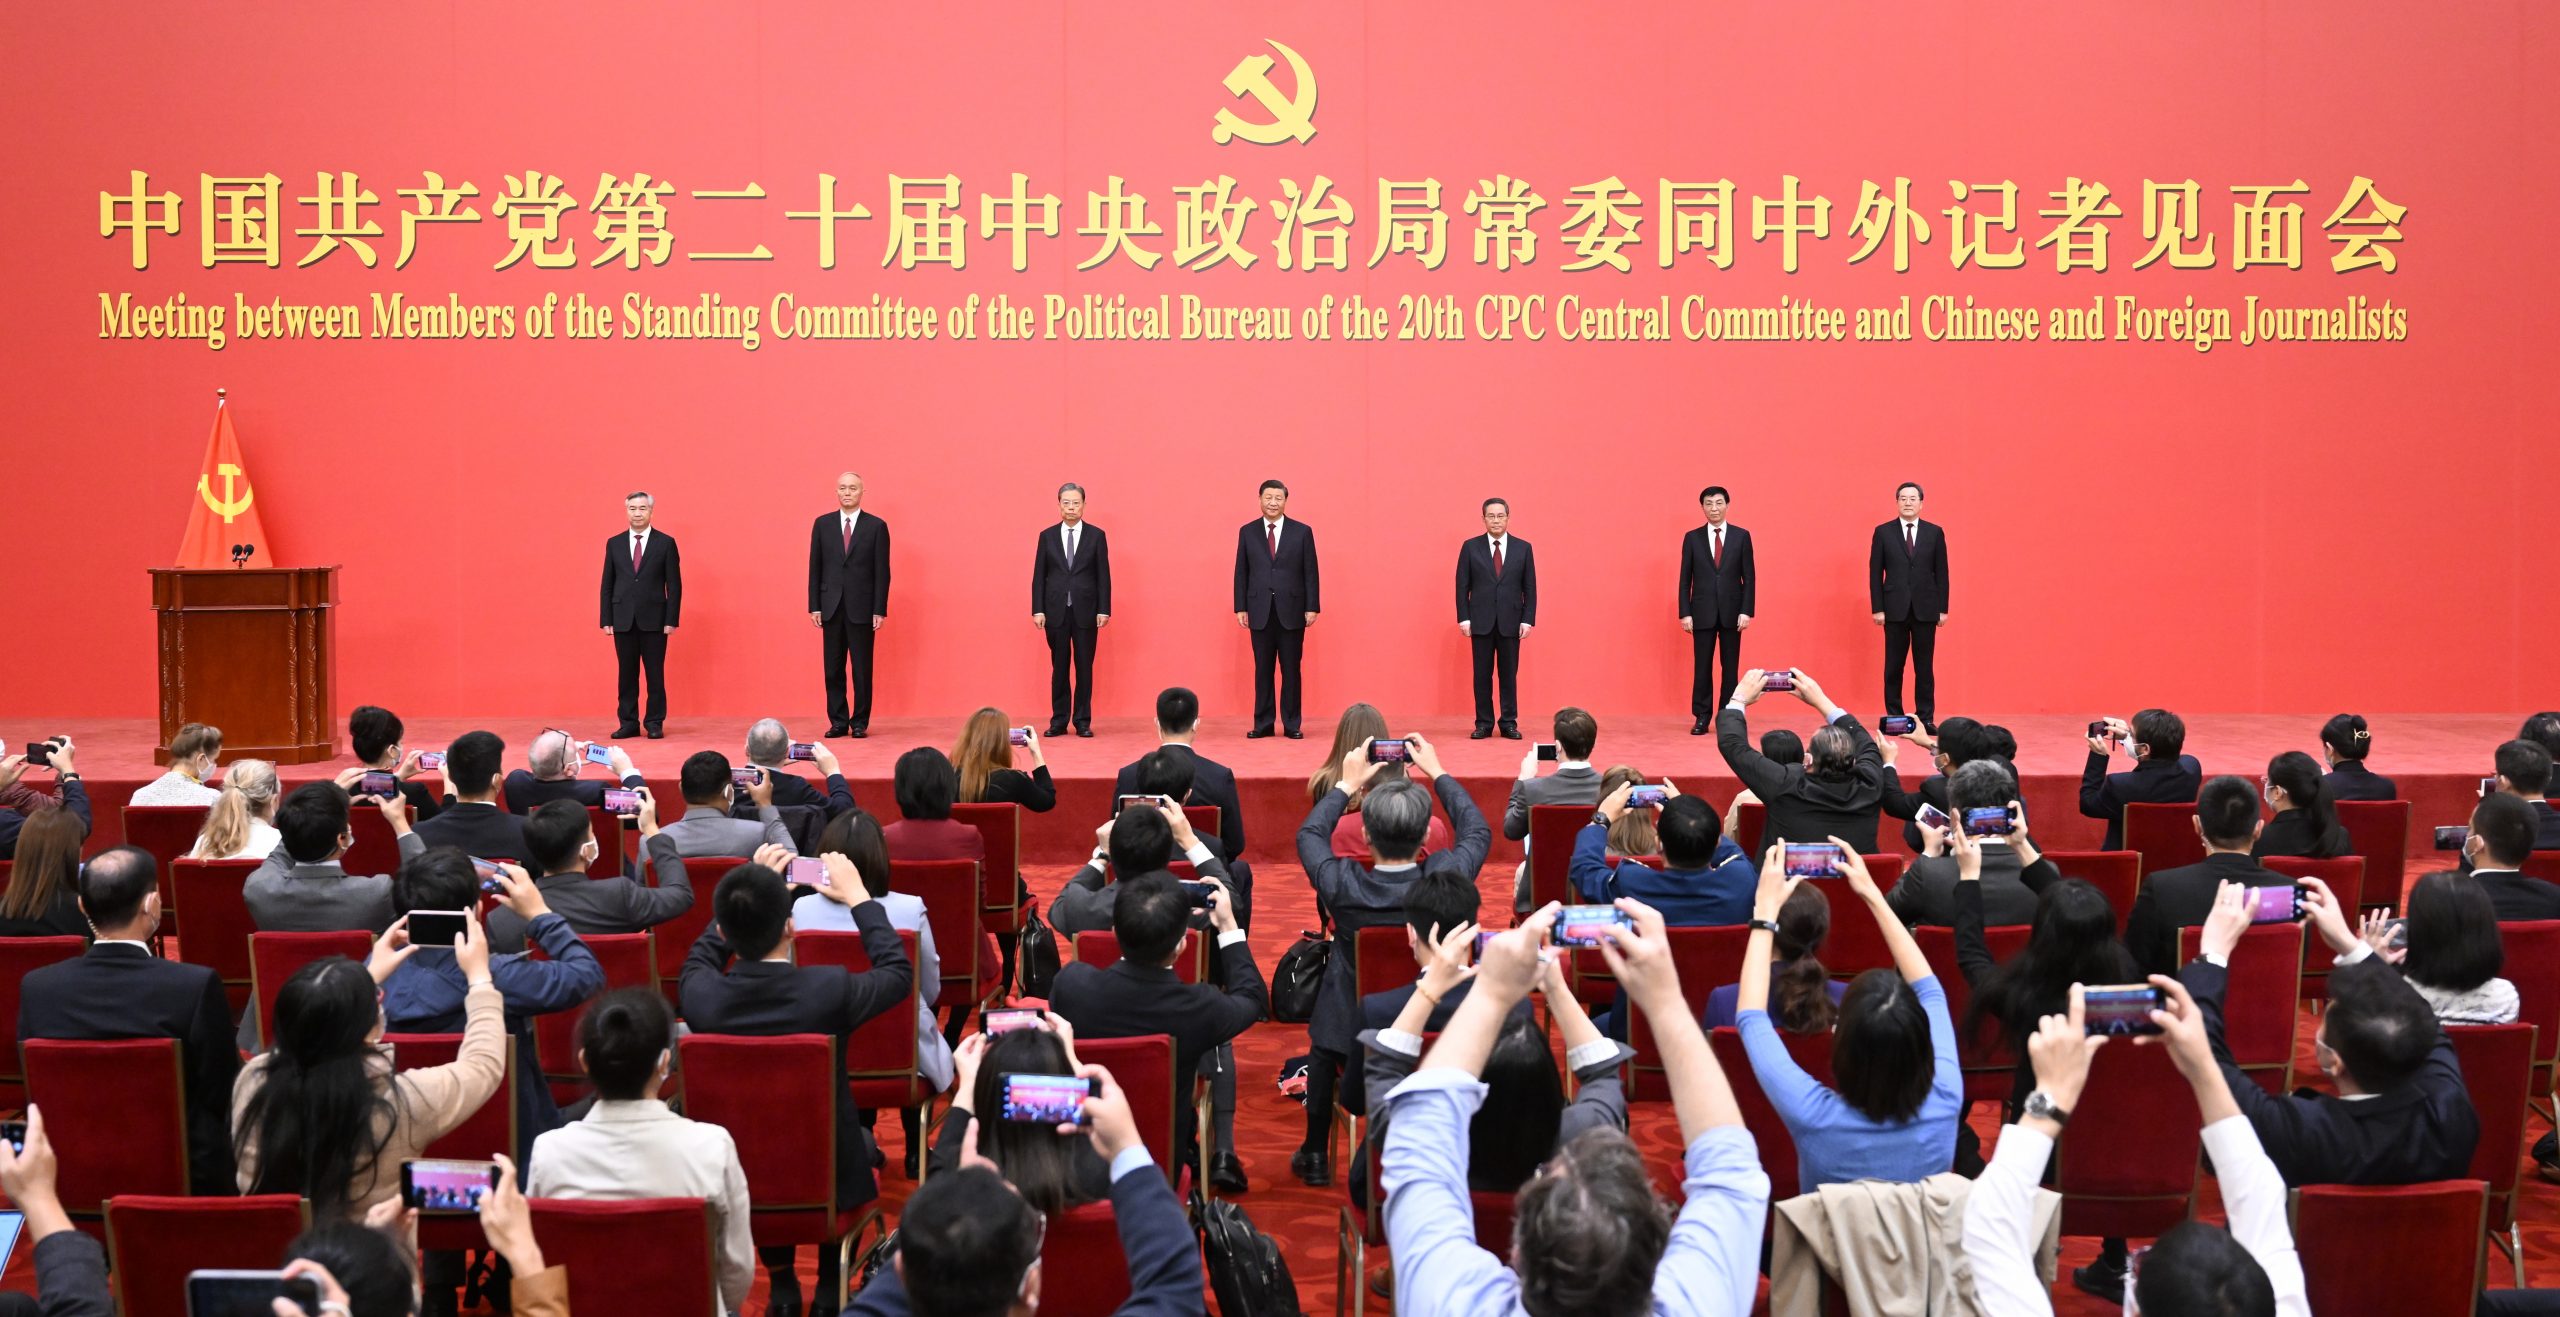 President Xi new line-up Politburo Standing Committee